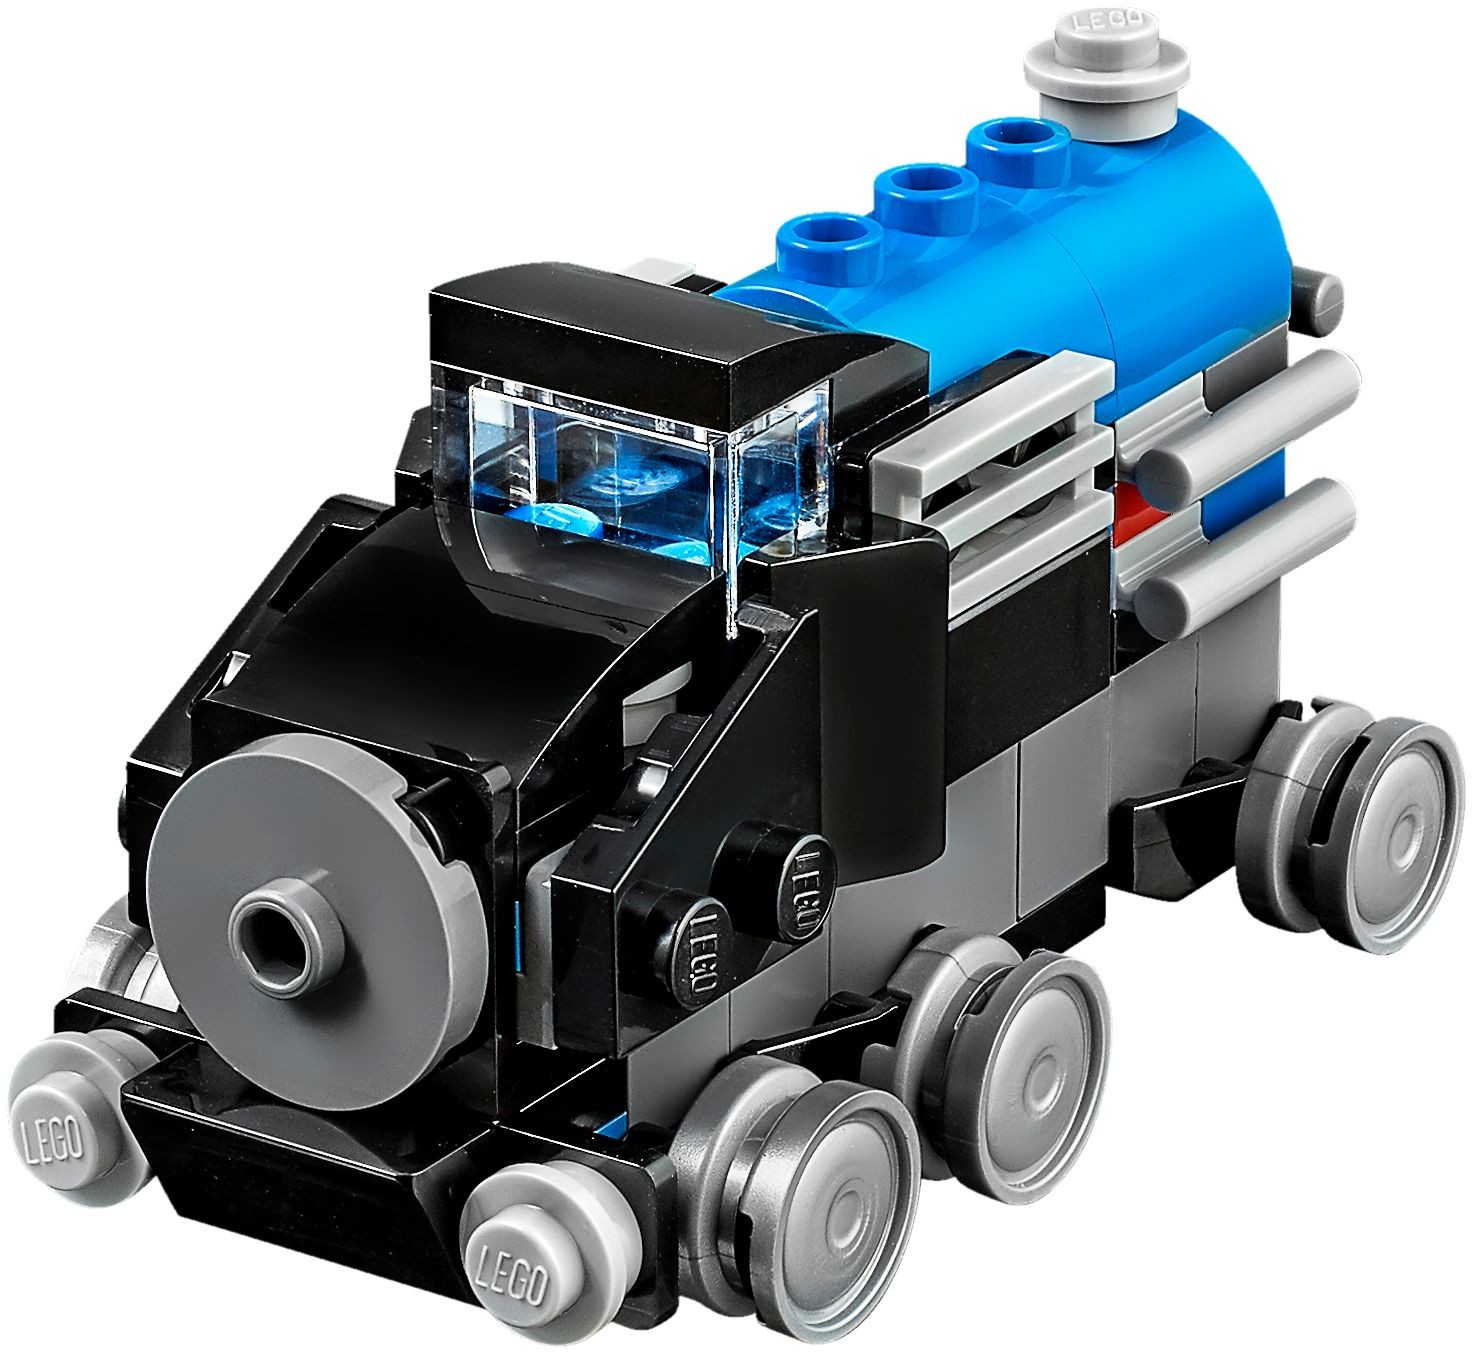 lego creator express blue 31054 instructions